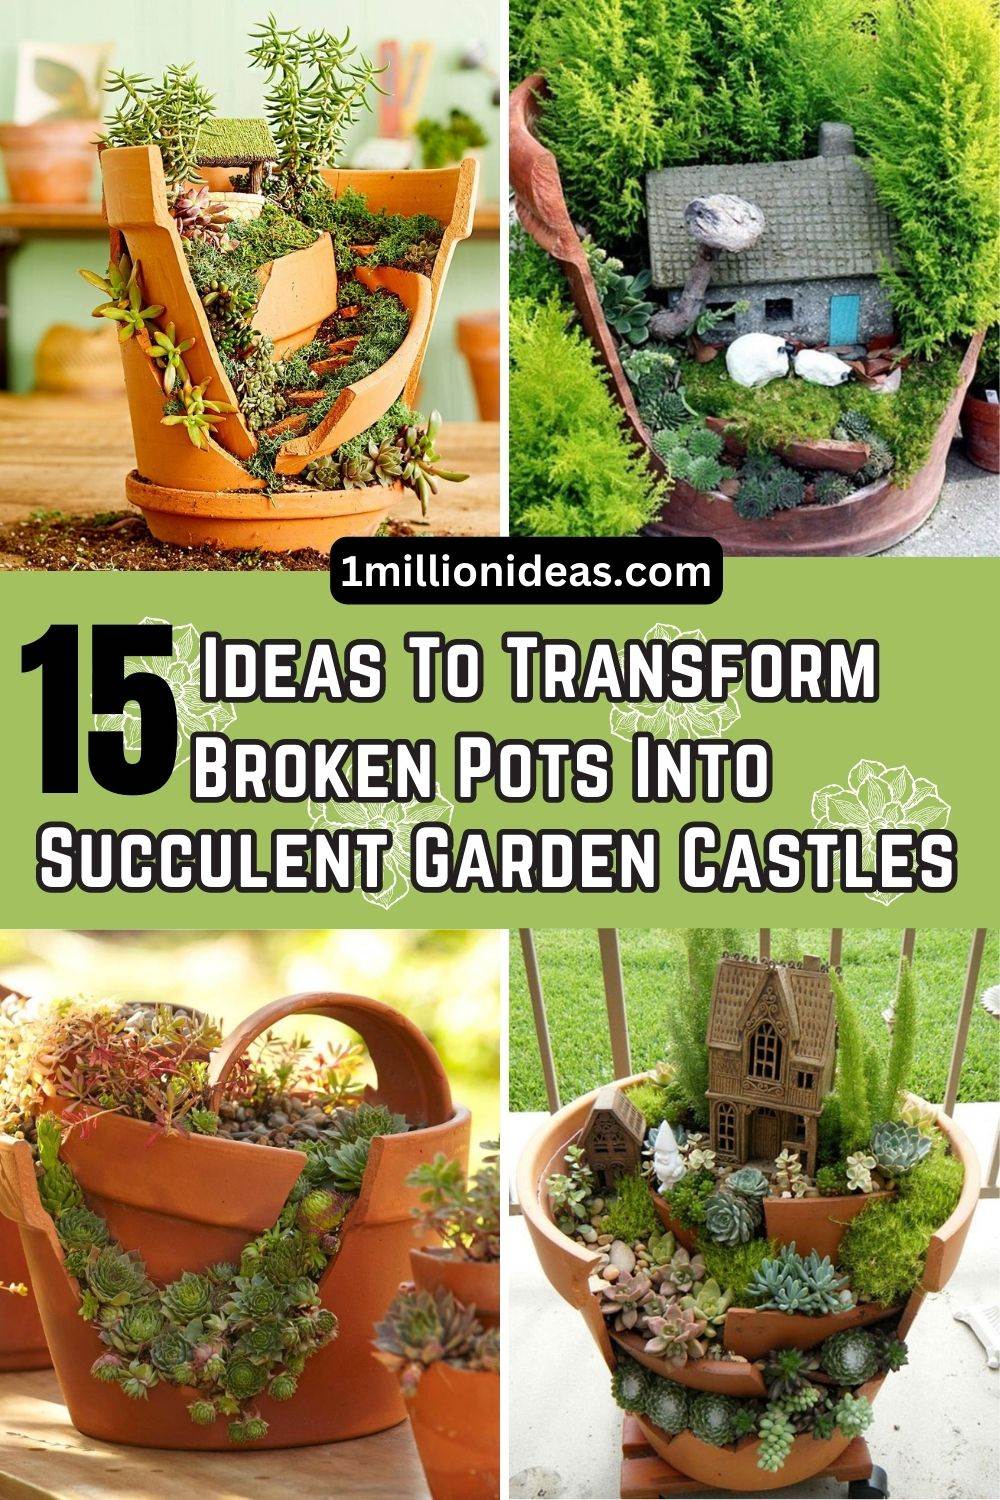 15 Ideas To Transform Broken Pots Into Succulent Garden Castles - 101